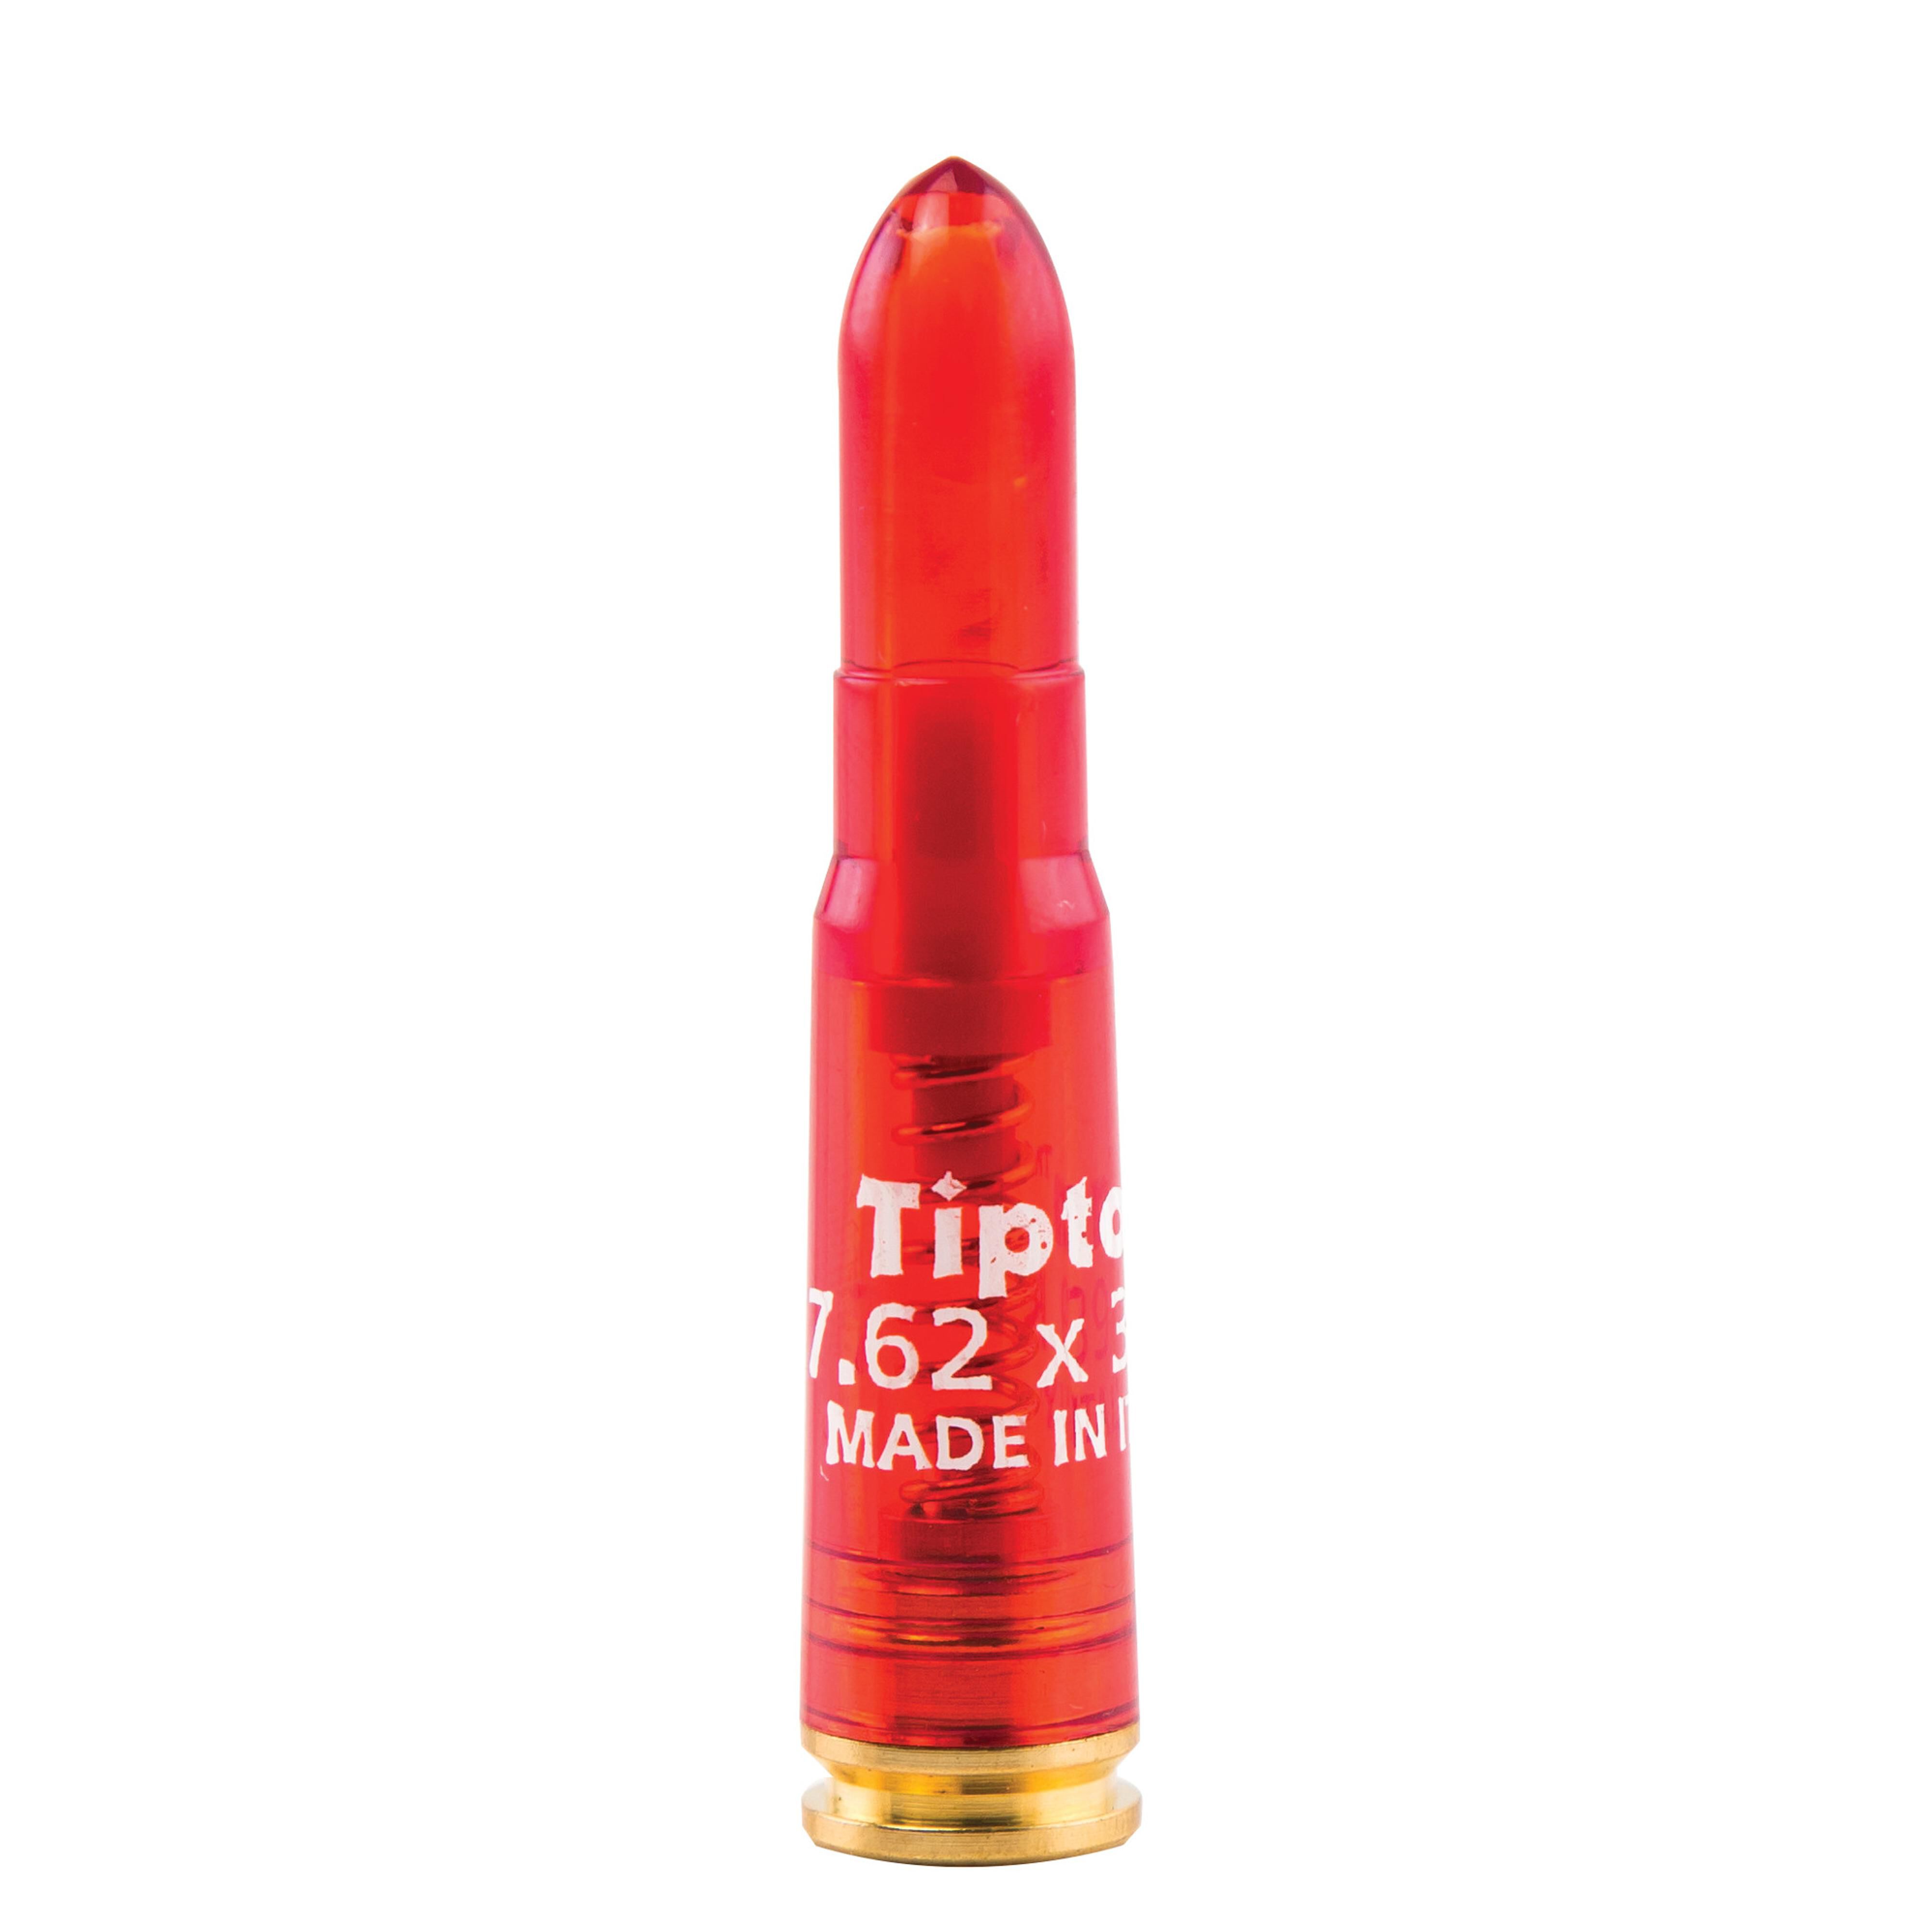 Tipton Snap Caps 7.62x39mm per 2 787336 for sale online 